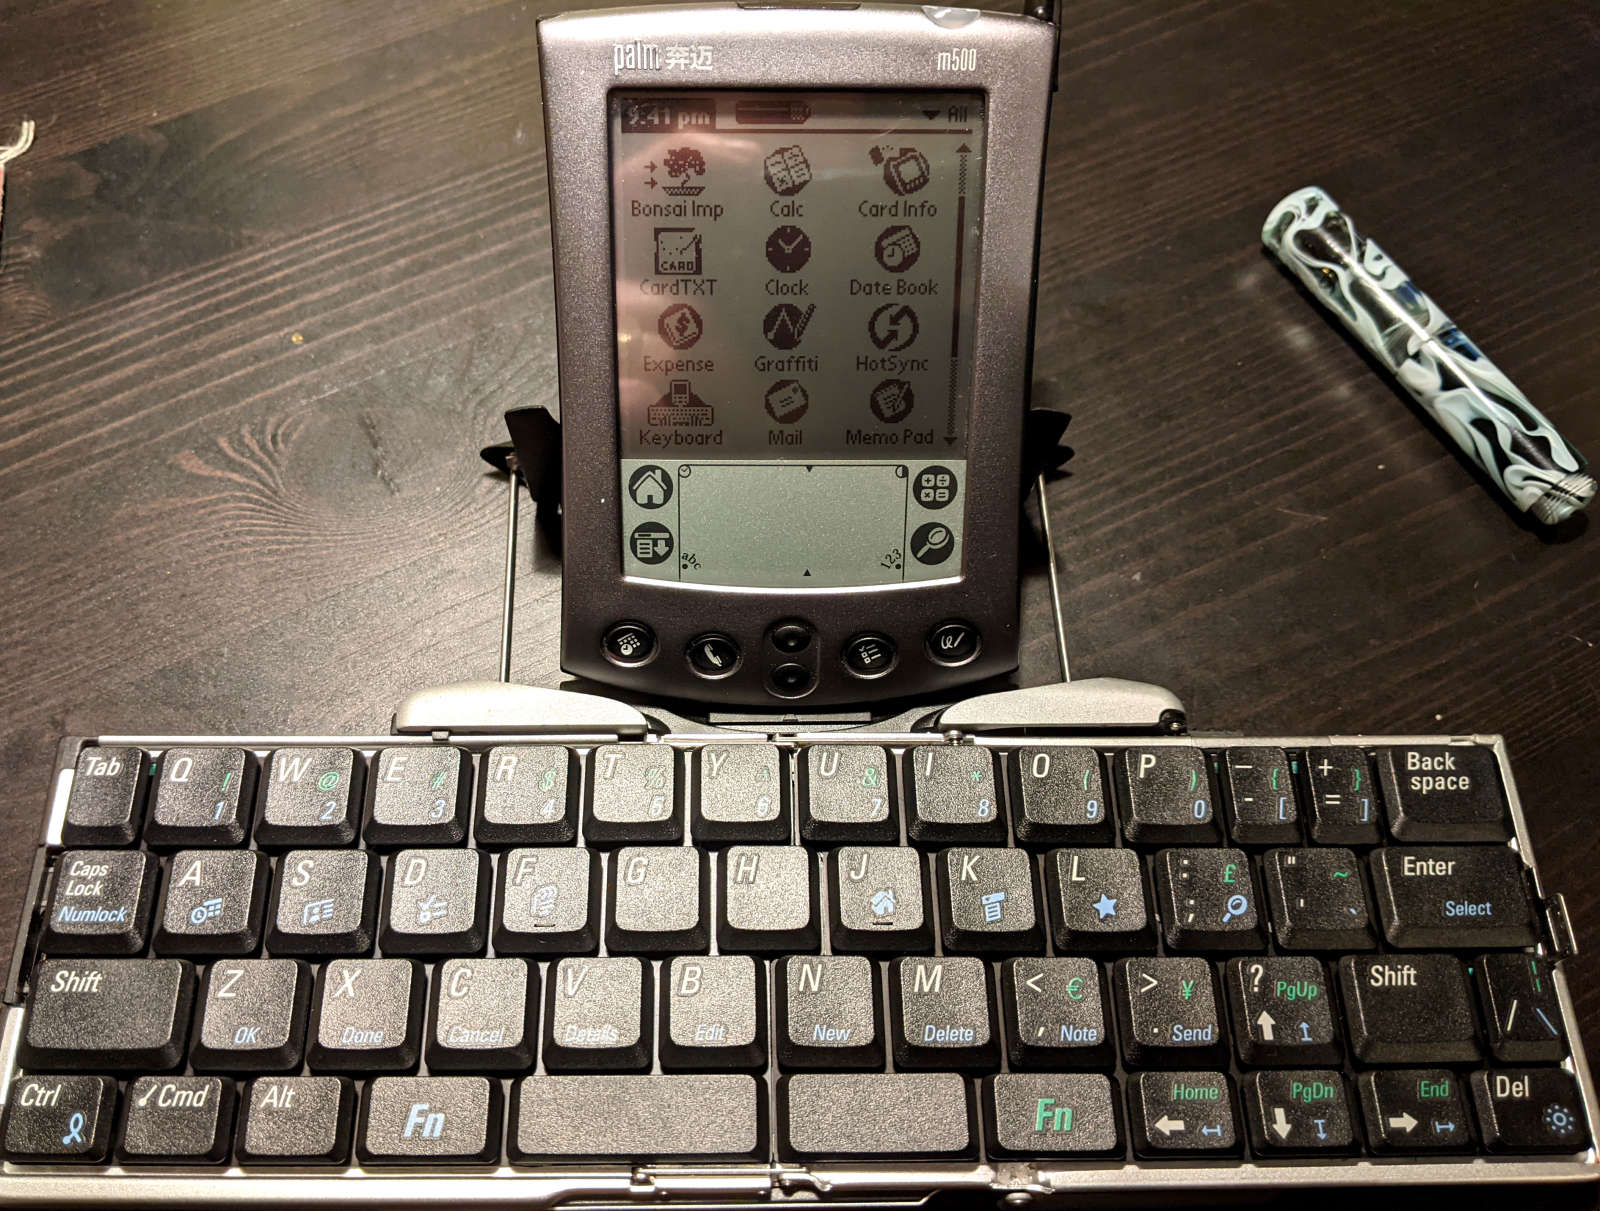 Palm M500 PDA with Palm keyboard and bonus, Wancai Mini fountain pen